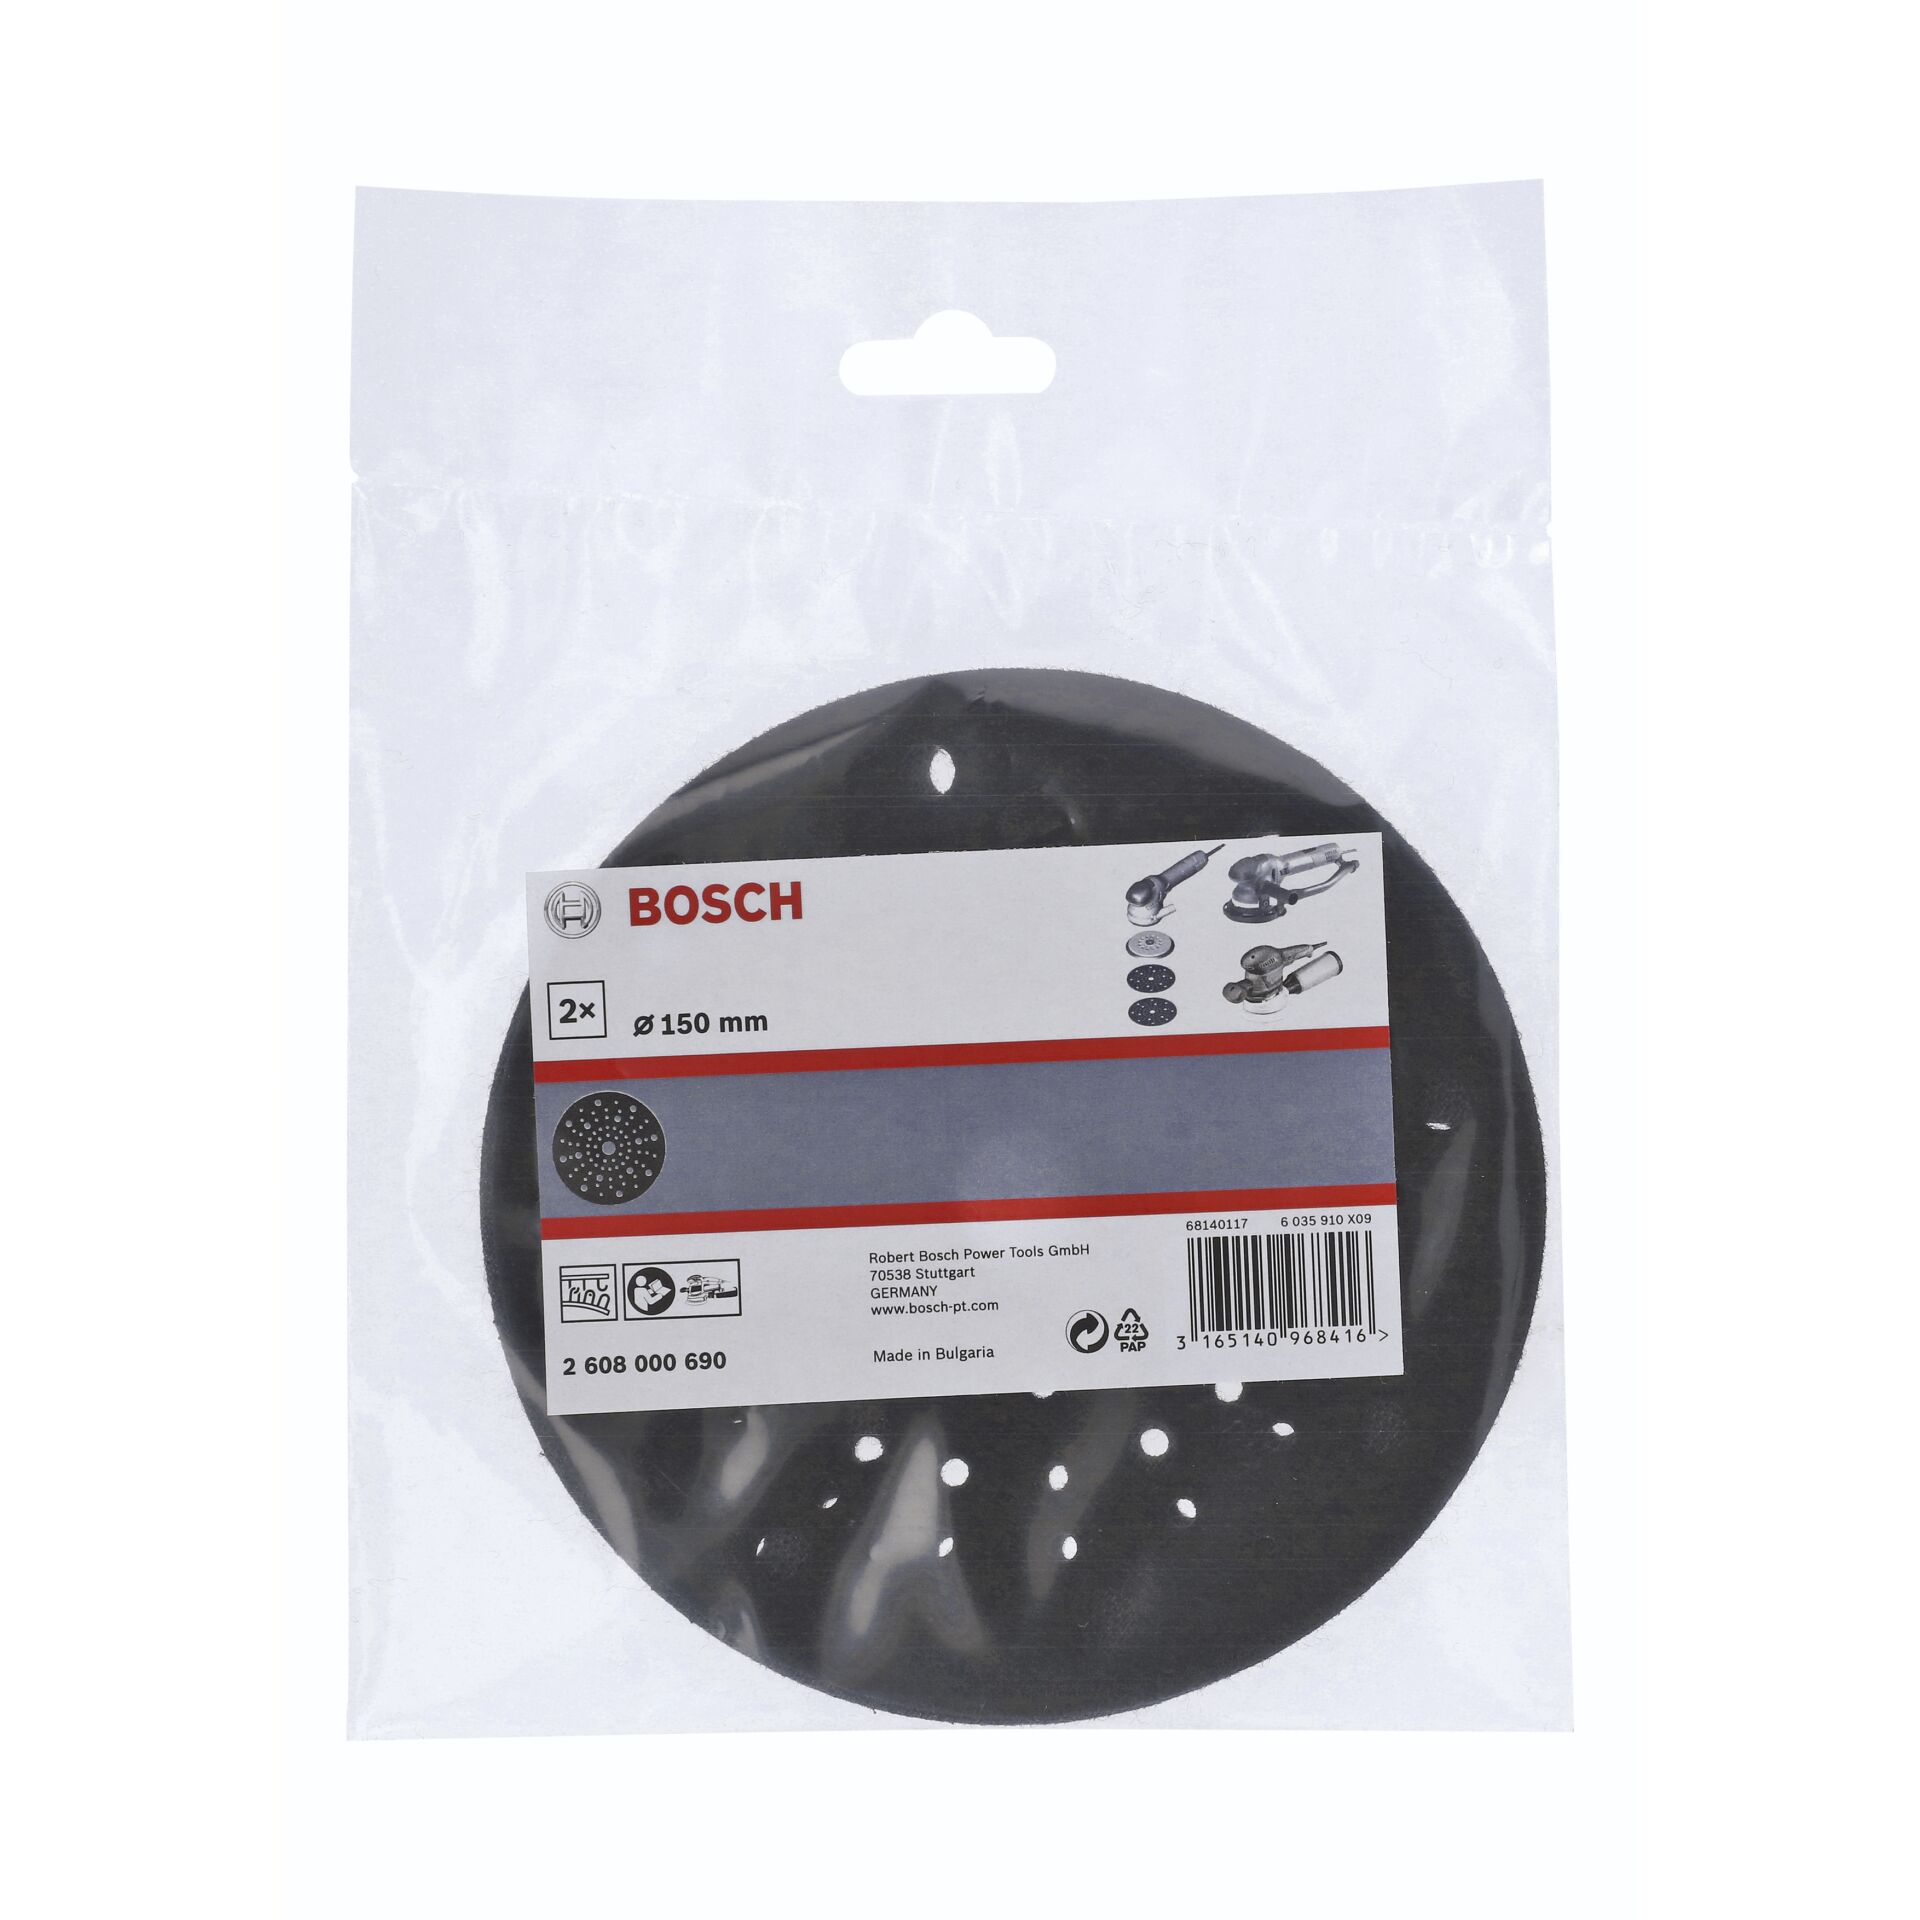 Bosch Sanding Disc Protector Random Orbit Sander 150mm